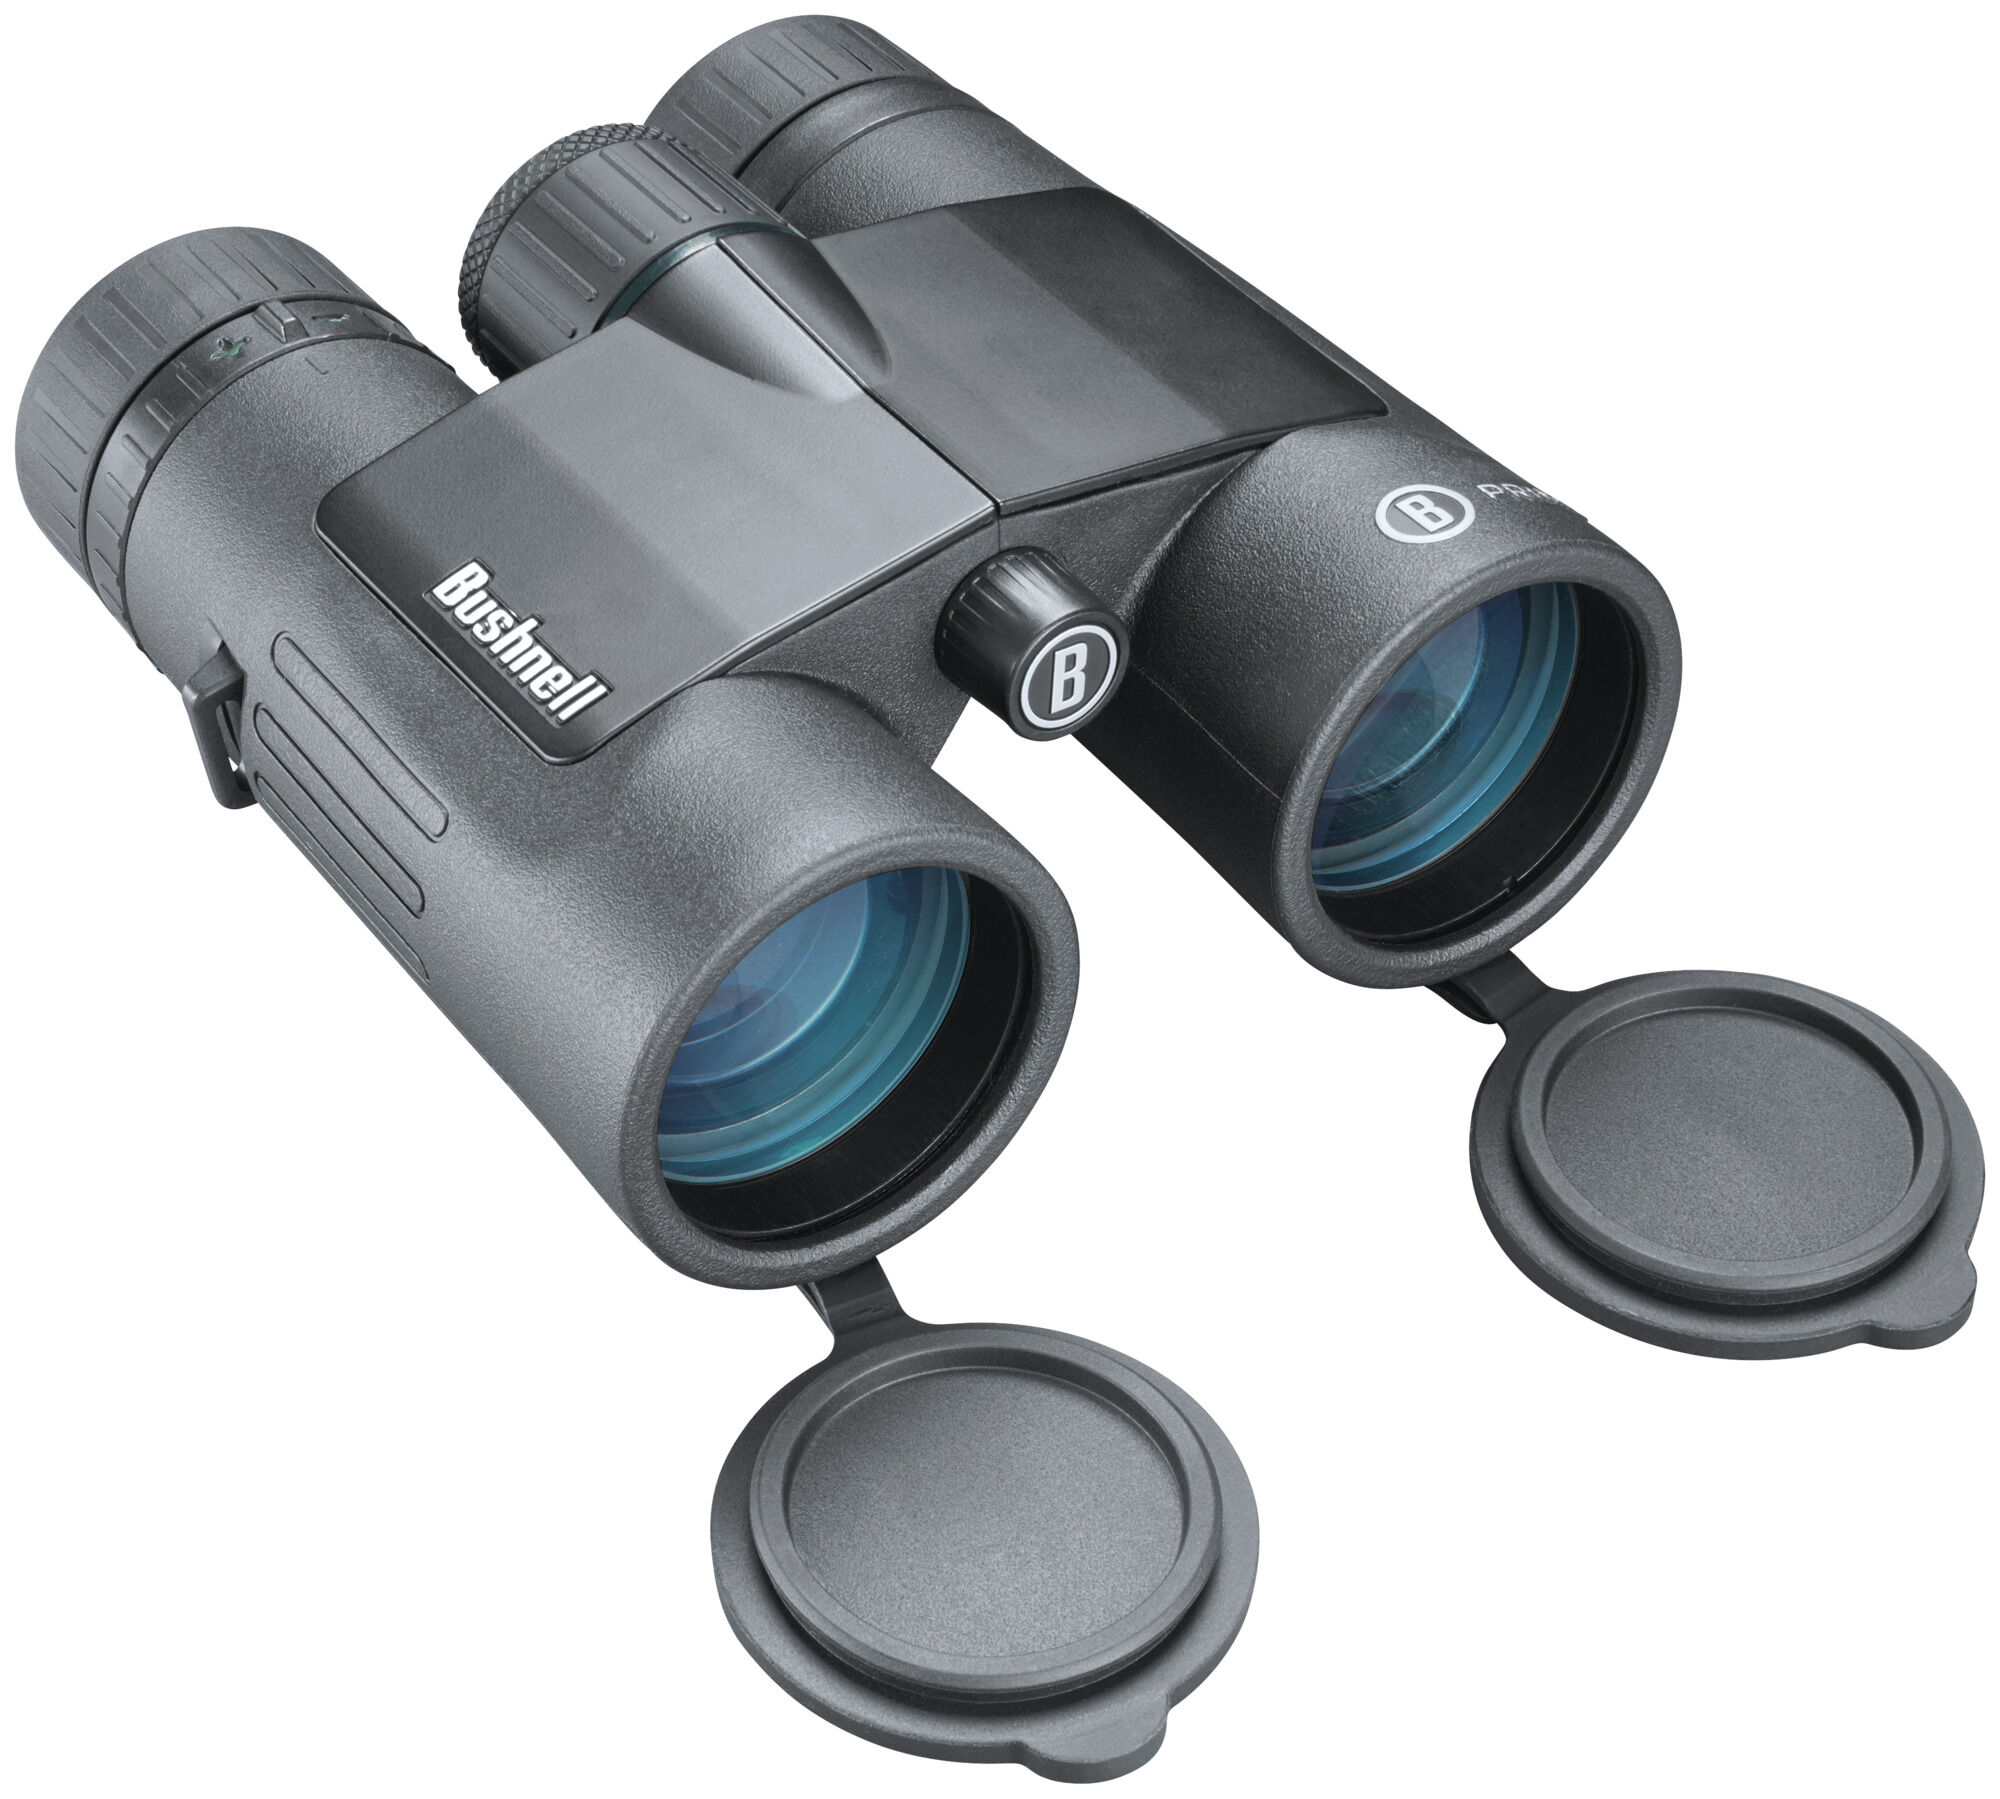 View All Binoculars | Bushnell